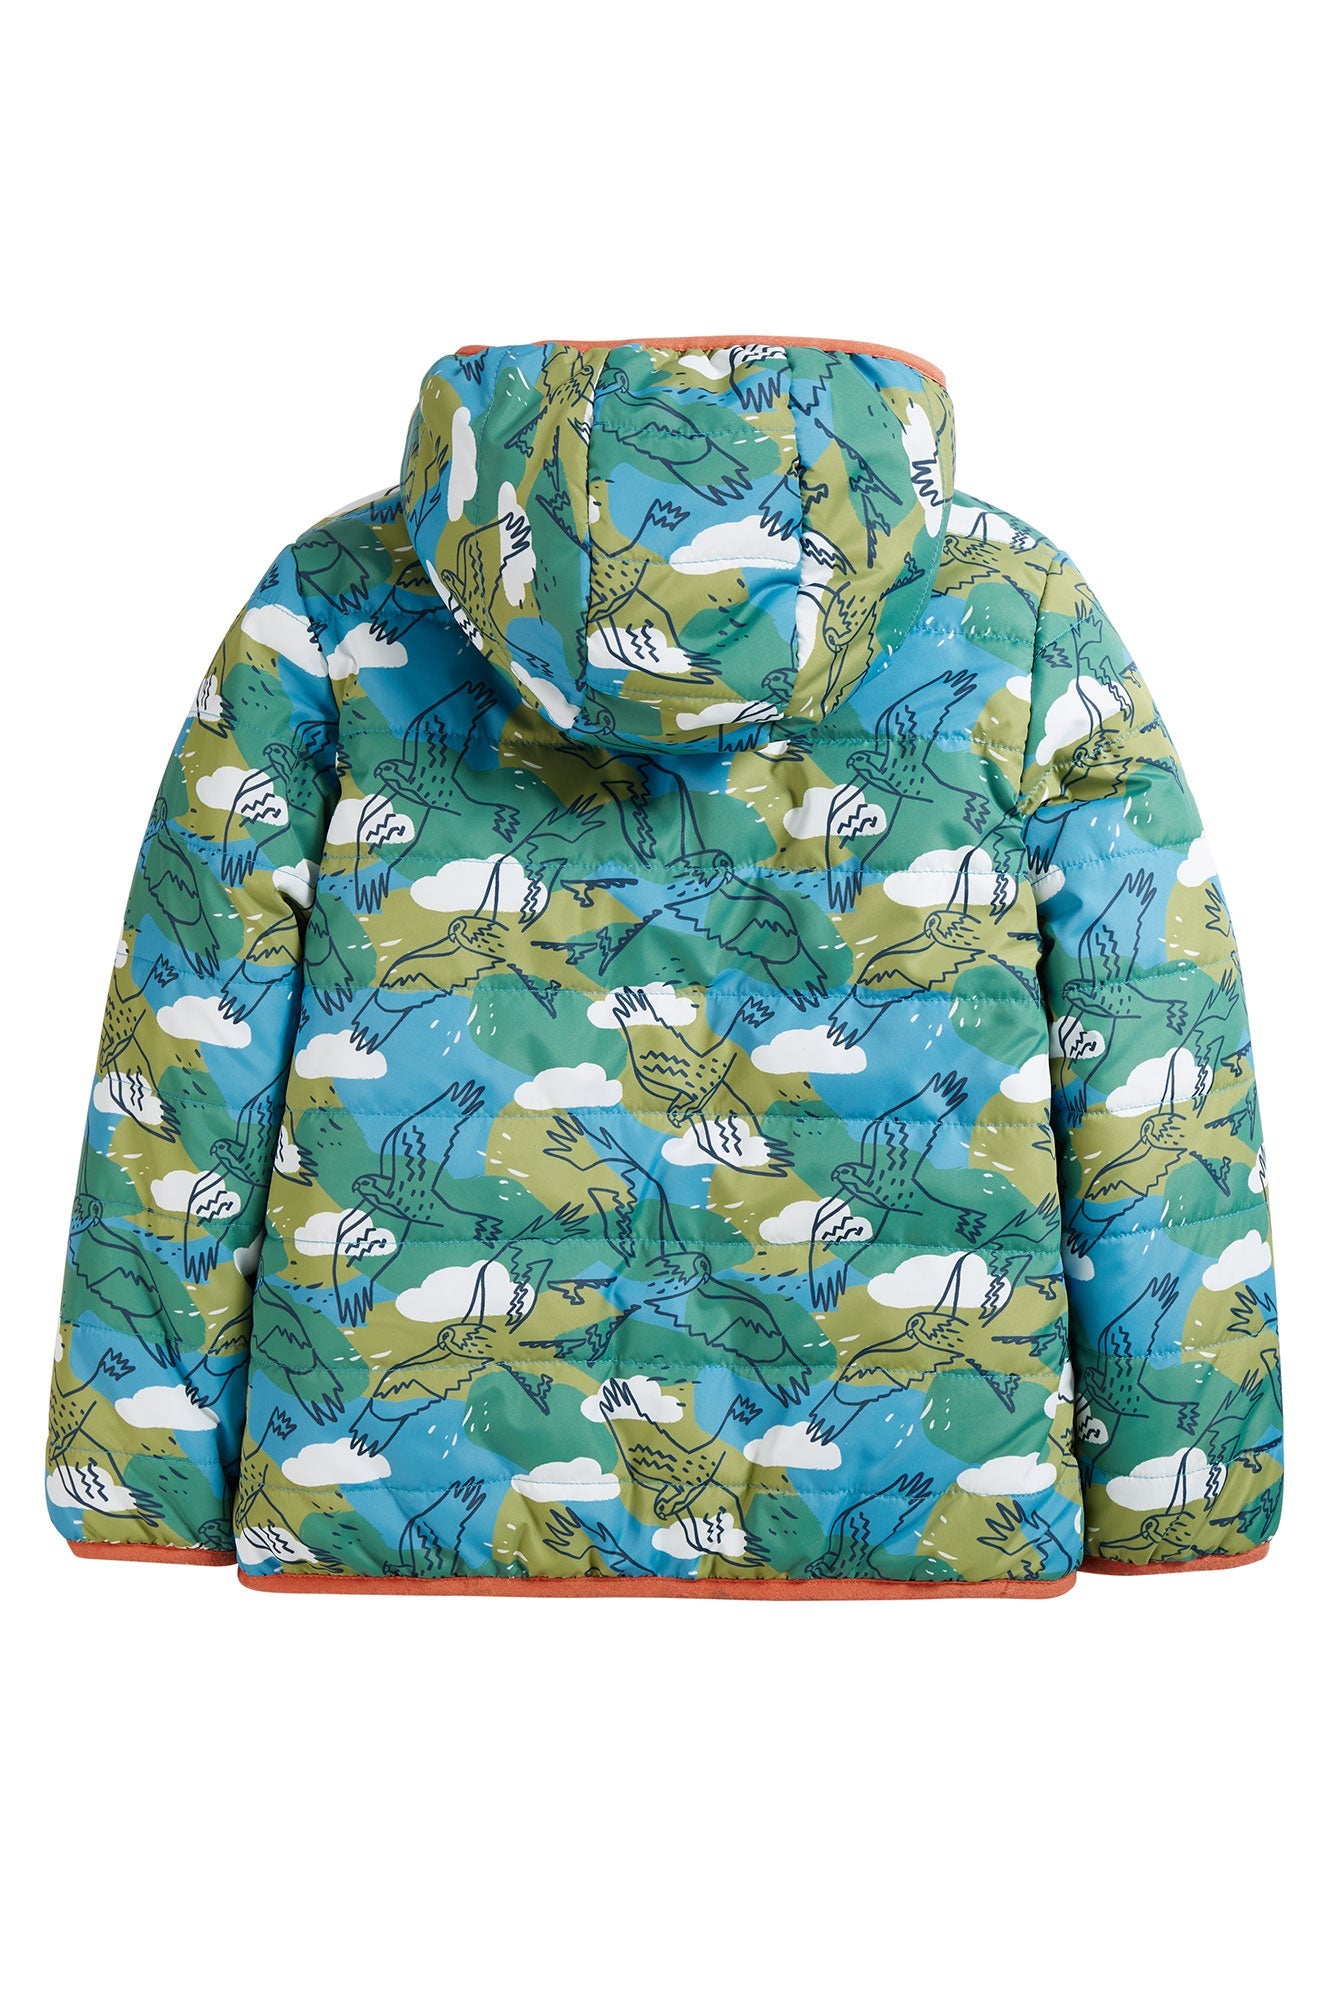 Frugi Reversible Toasty Trail Jacket in Birds of Prey/Indigo-Kids-Ohh! By Gum - Shop Sustainable